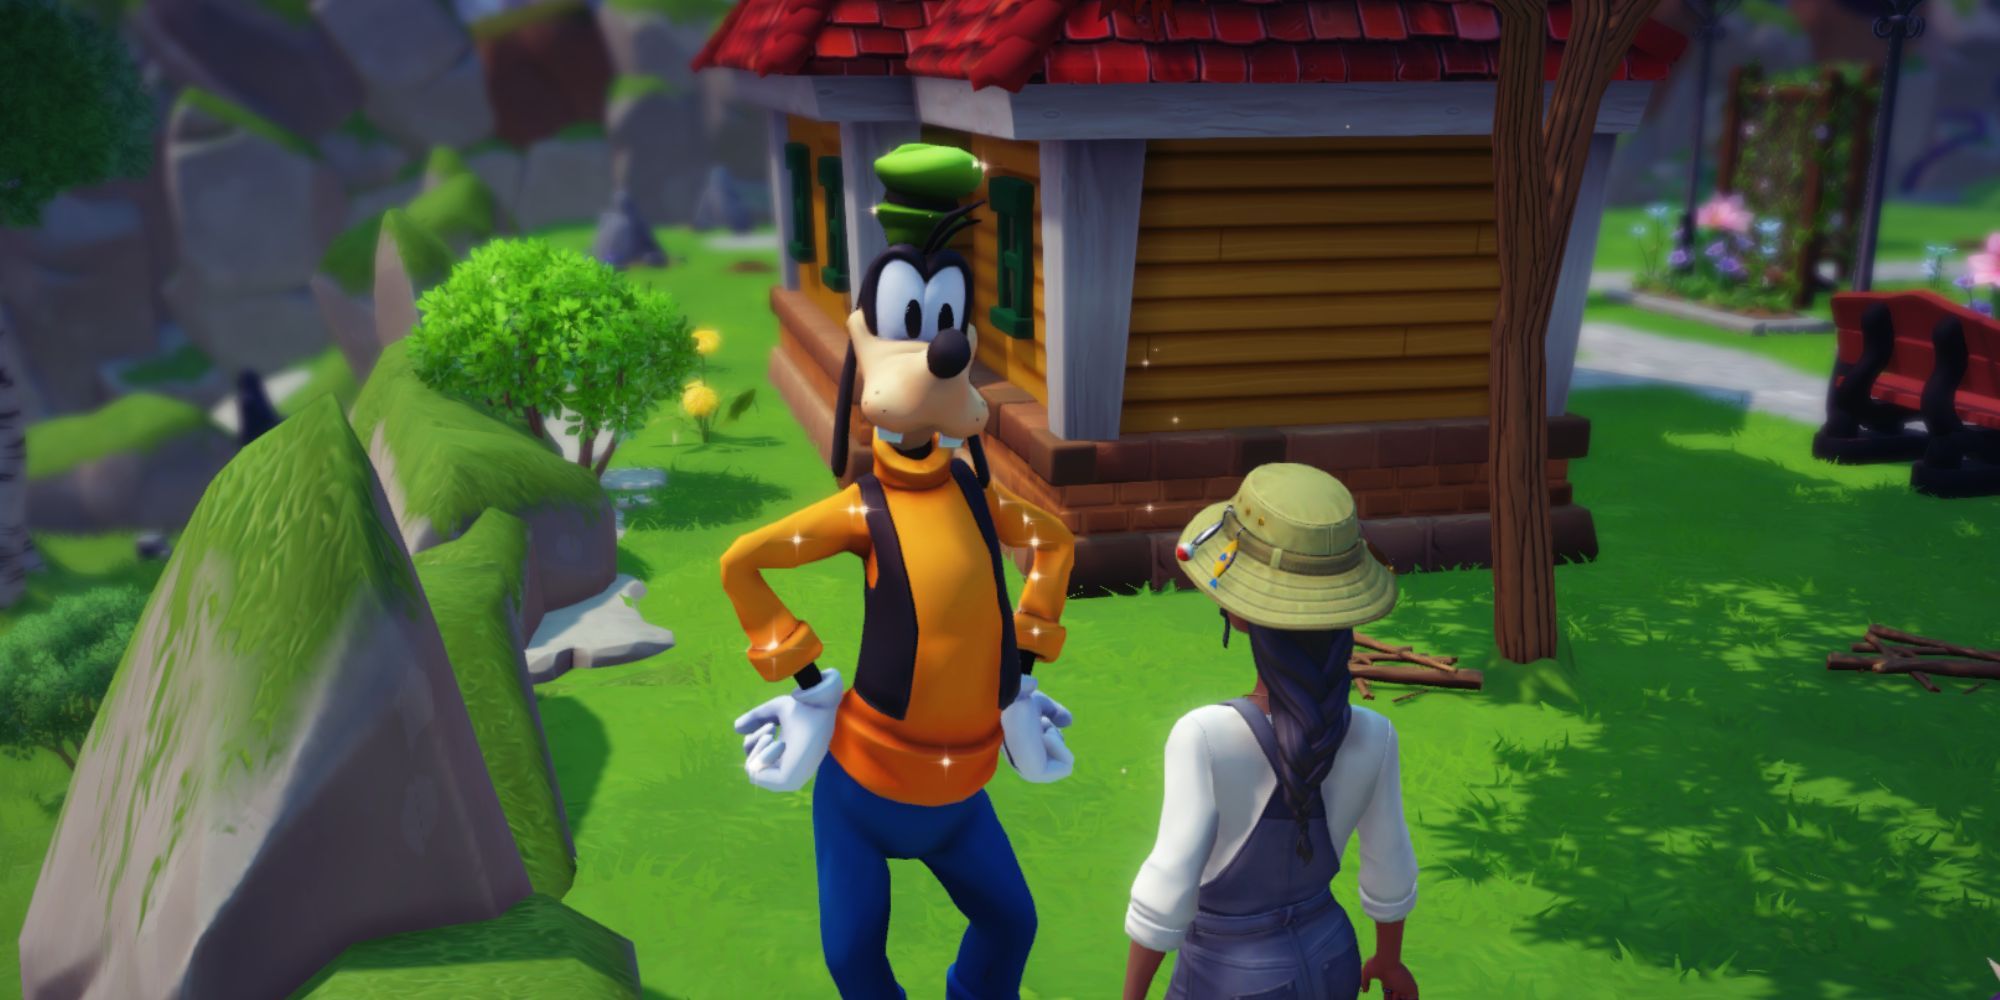 Disney Dreamlight Valley protagonist talking to Goofy.